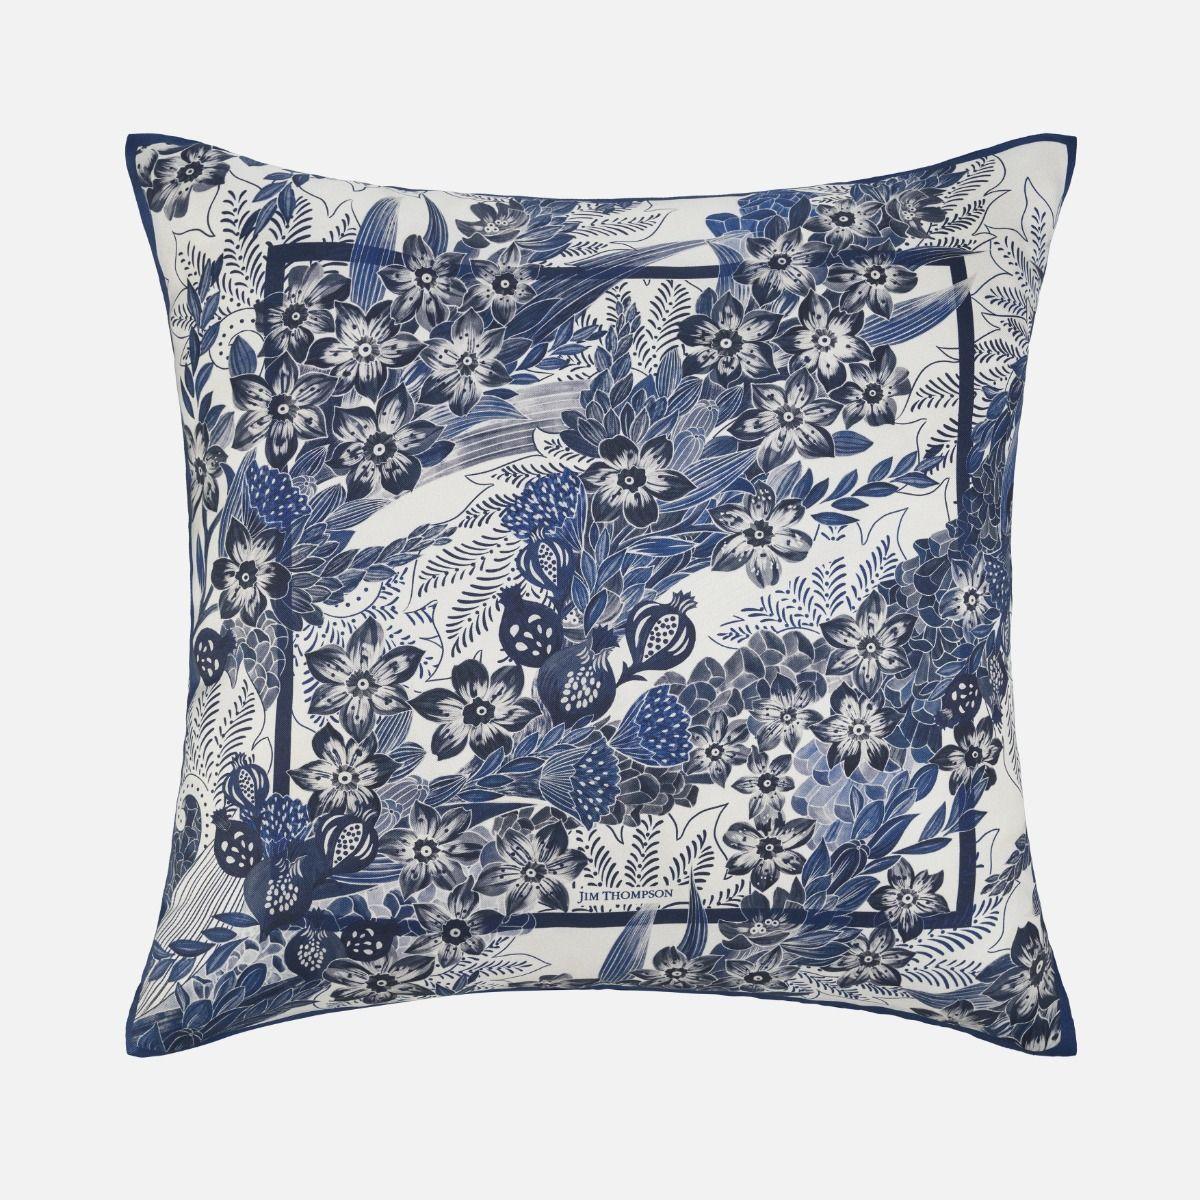 Floral Field Silk Cushion Cover 18" - Navy Blue